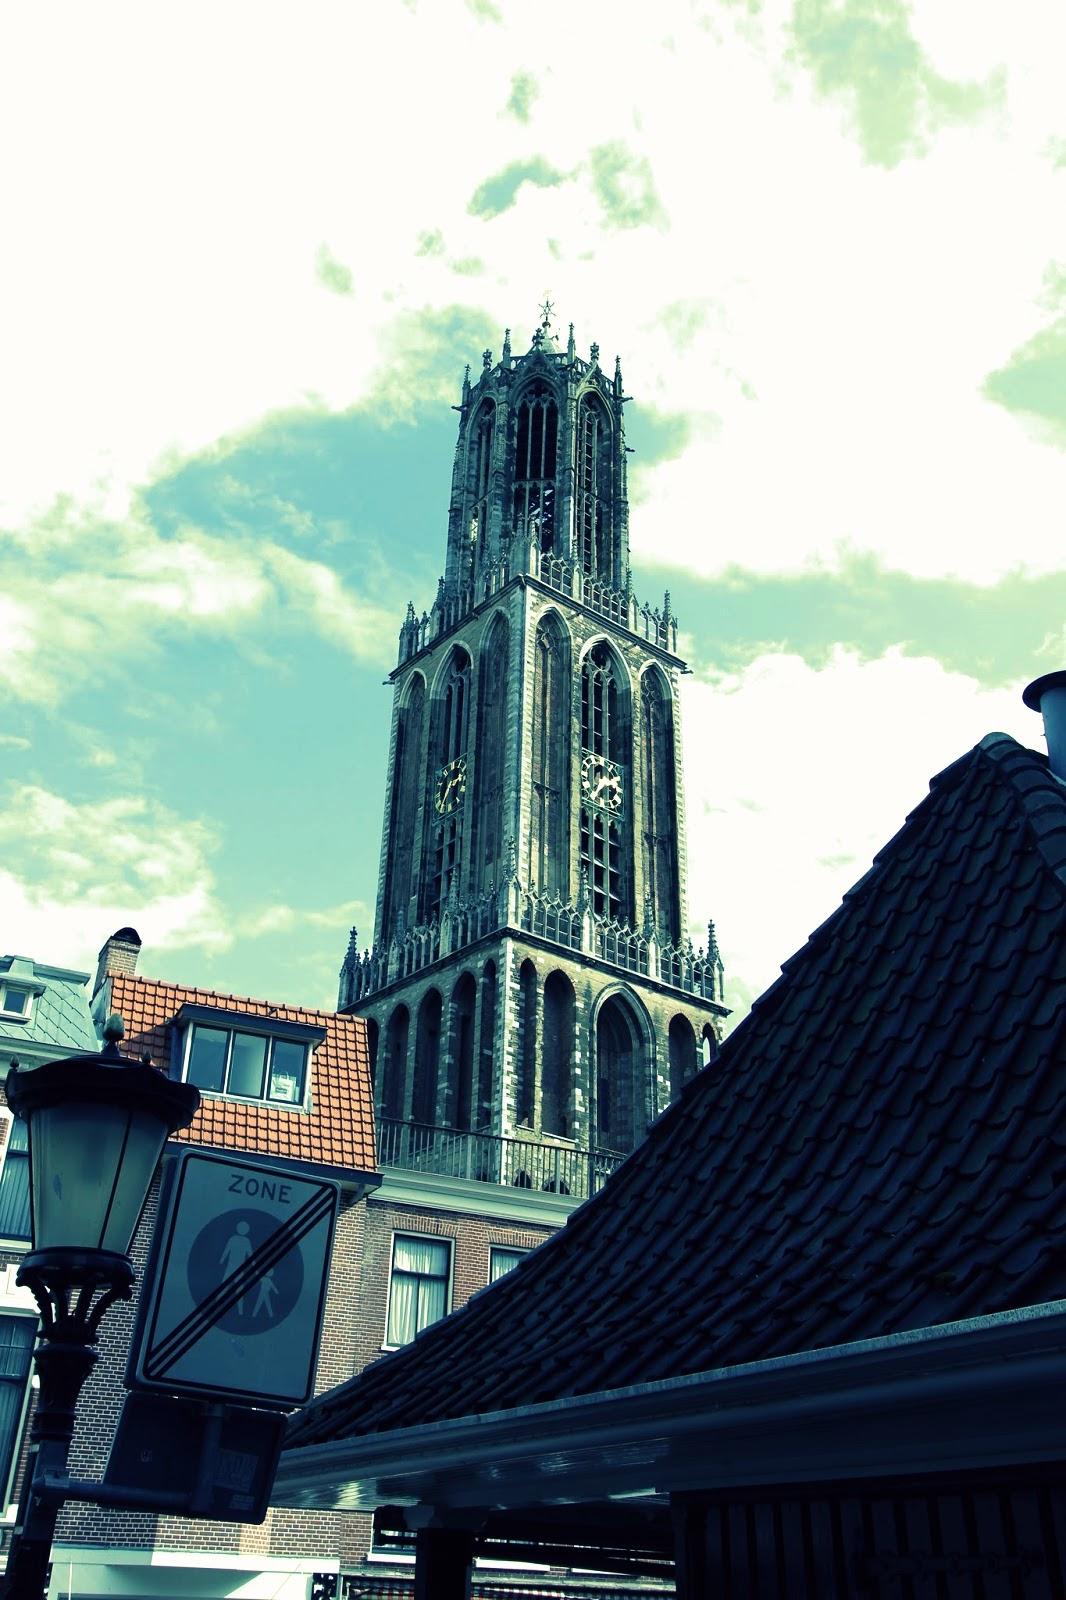 The Church Tower in Utrecht